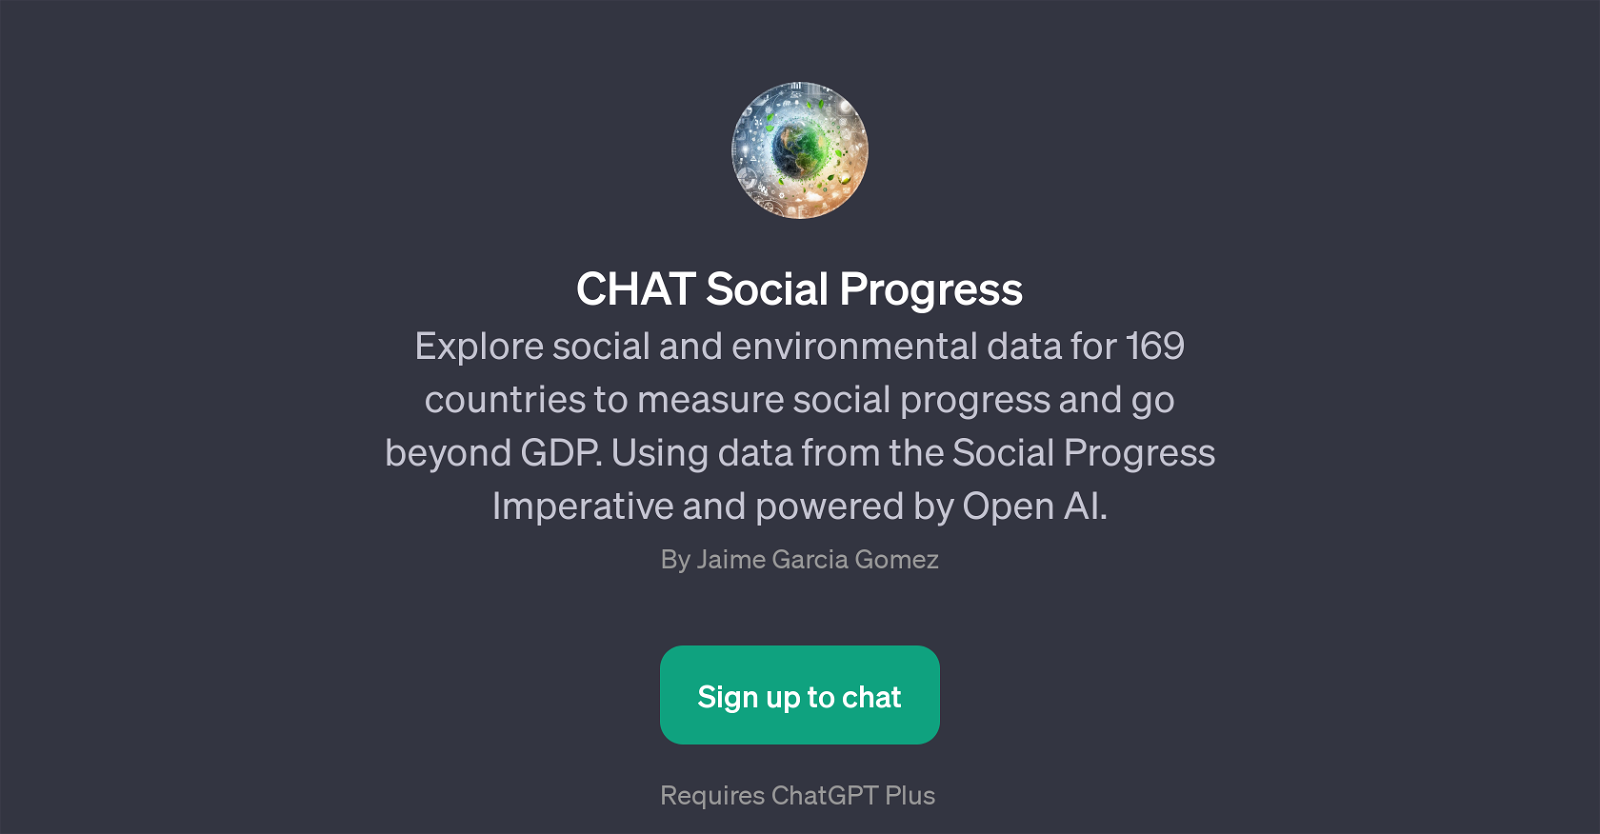 CHAT Social Progress website